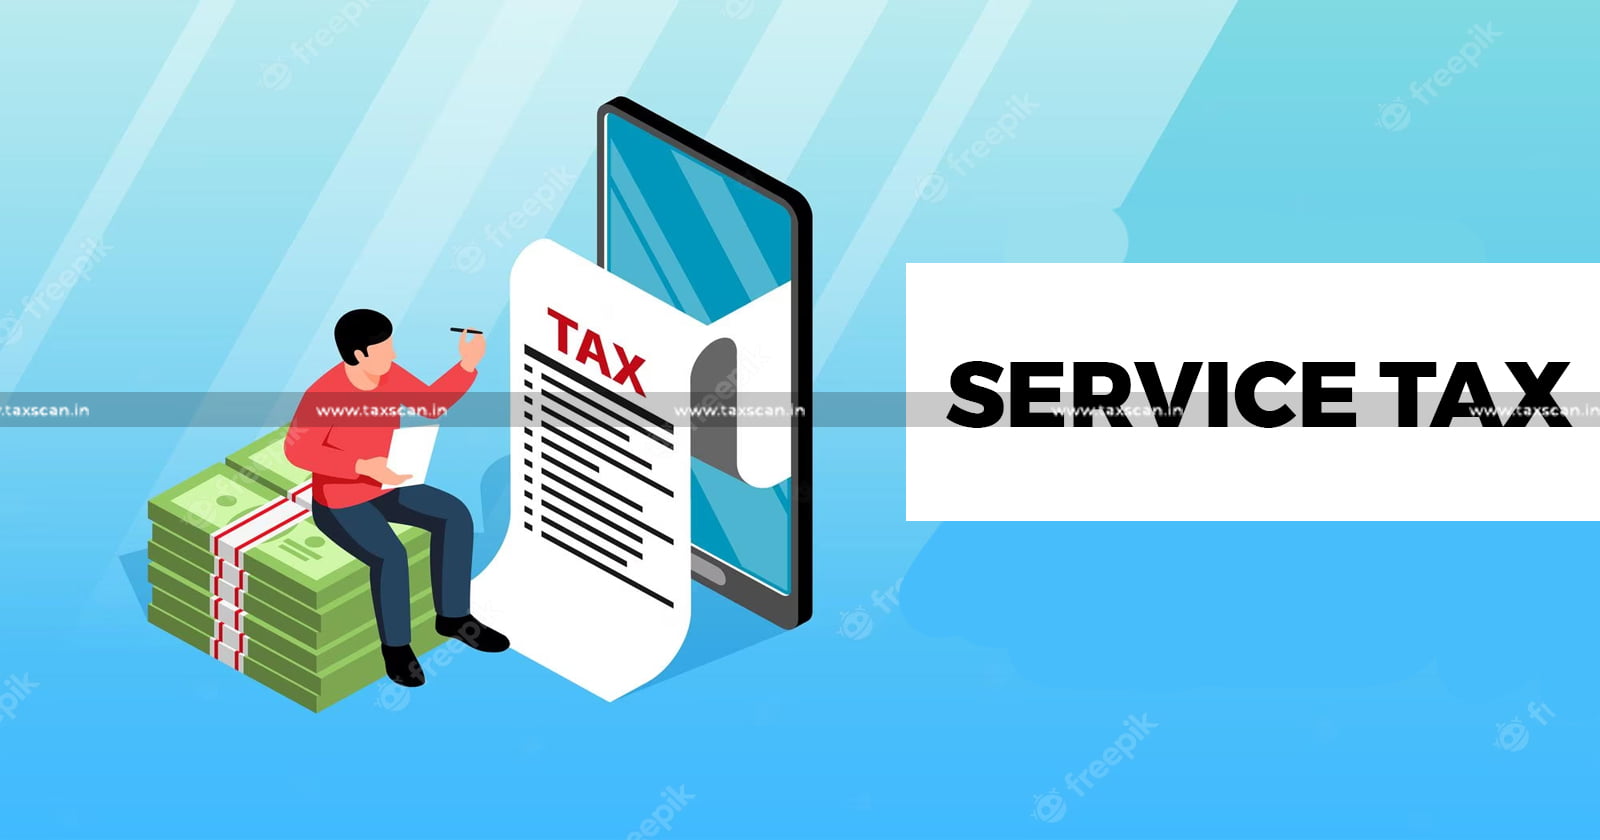 CESTAT - CESTAT Ahmedabad - Service tax - Trial Balance Sheet - Asset - Refund - Unjust Enrichment - Service Tax Refund - TAXSCAN